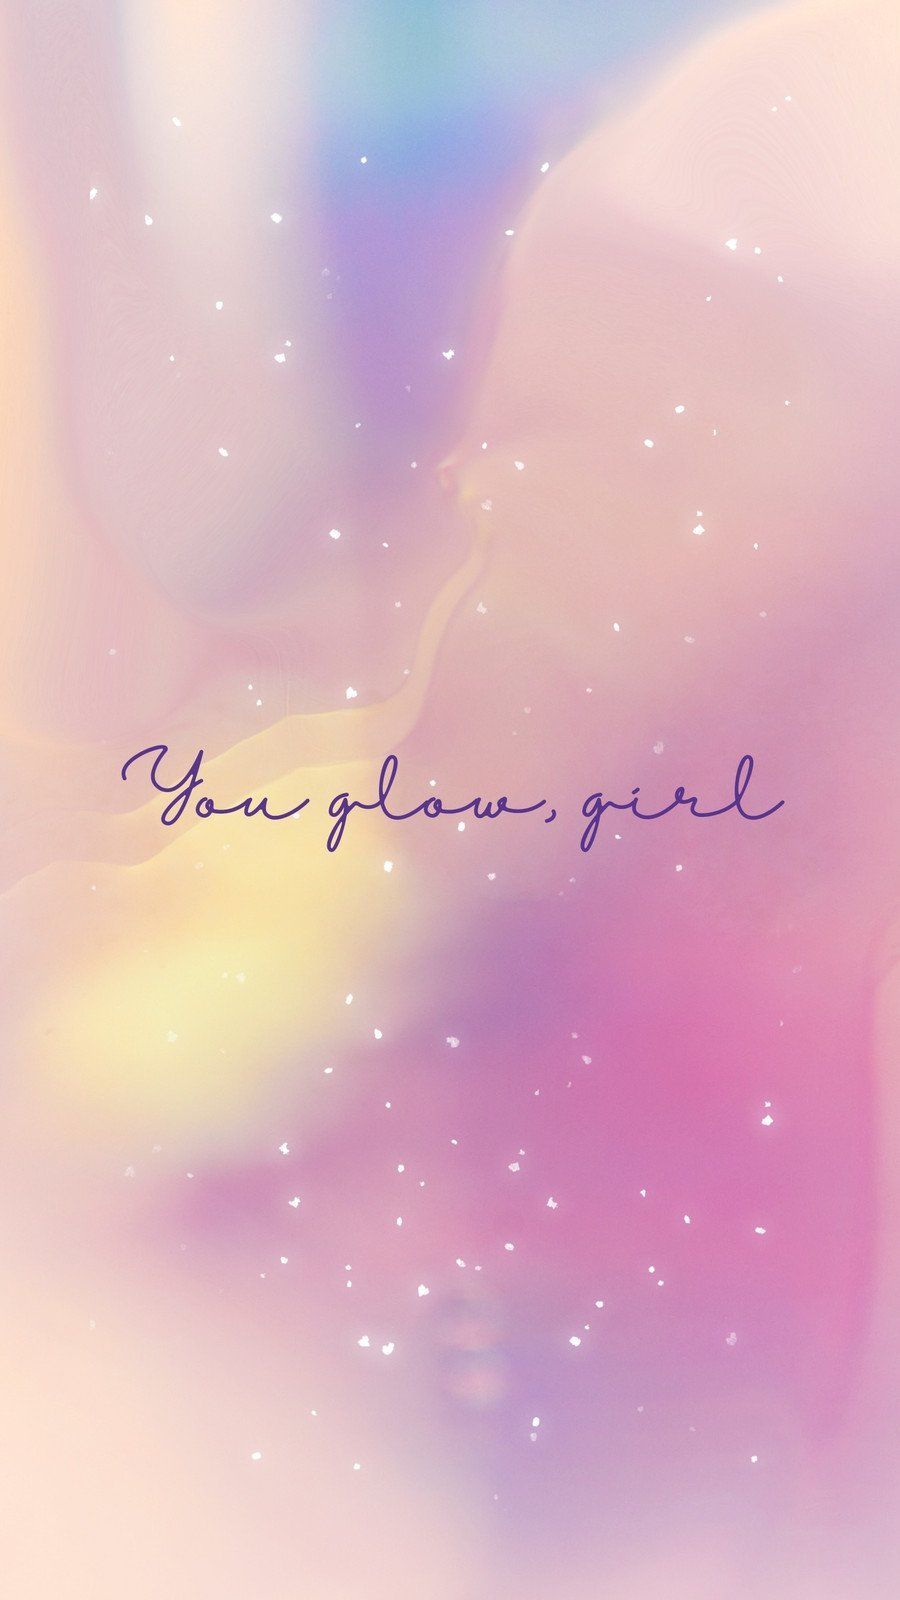 You glow girl wallpaper - Phone, cute, pink phone, pretty, cool